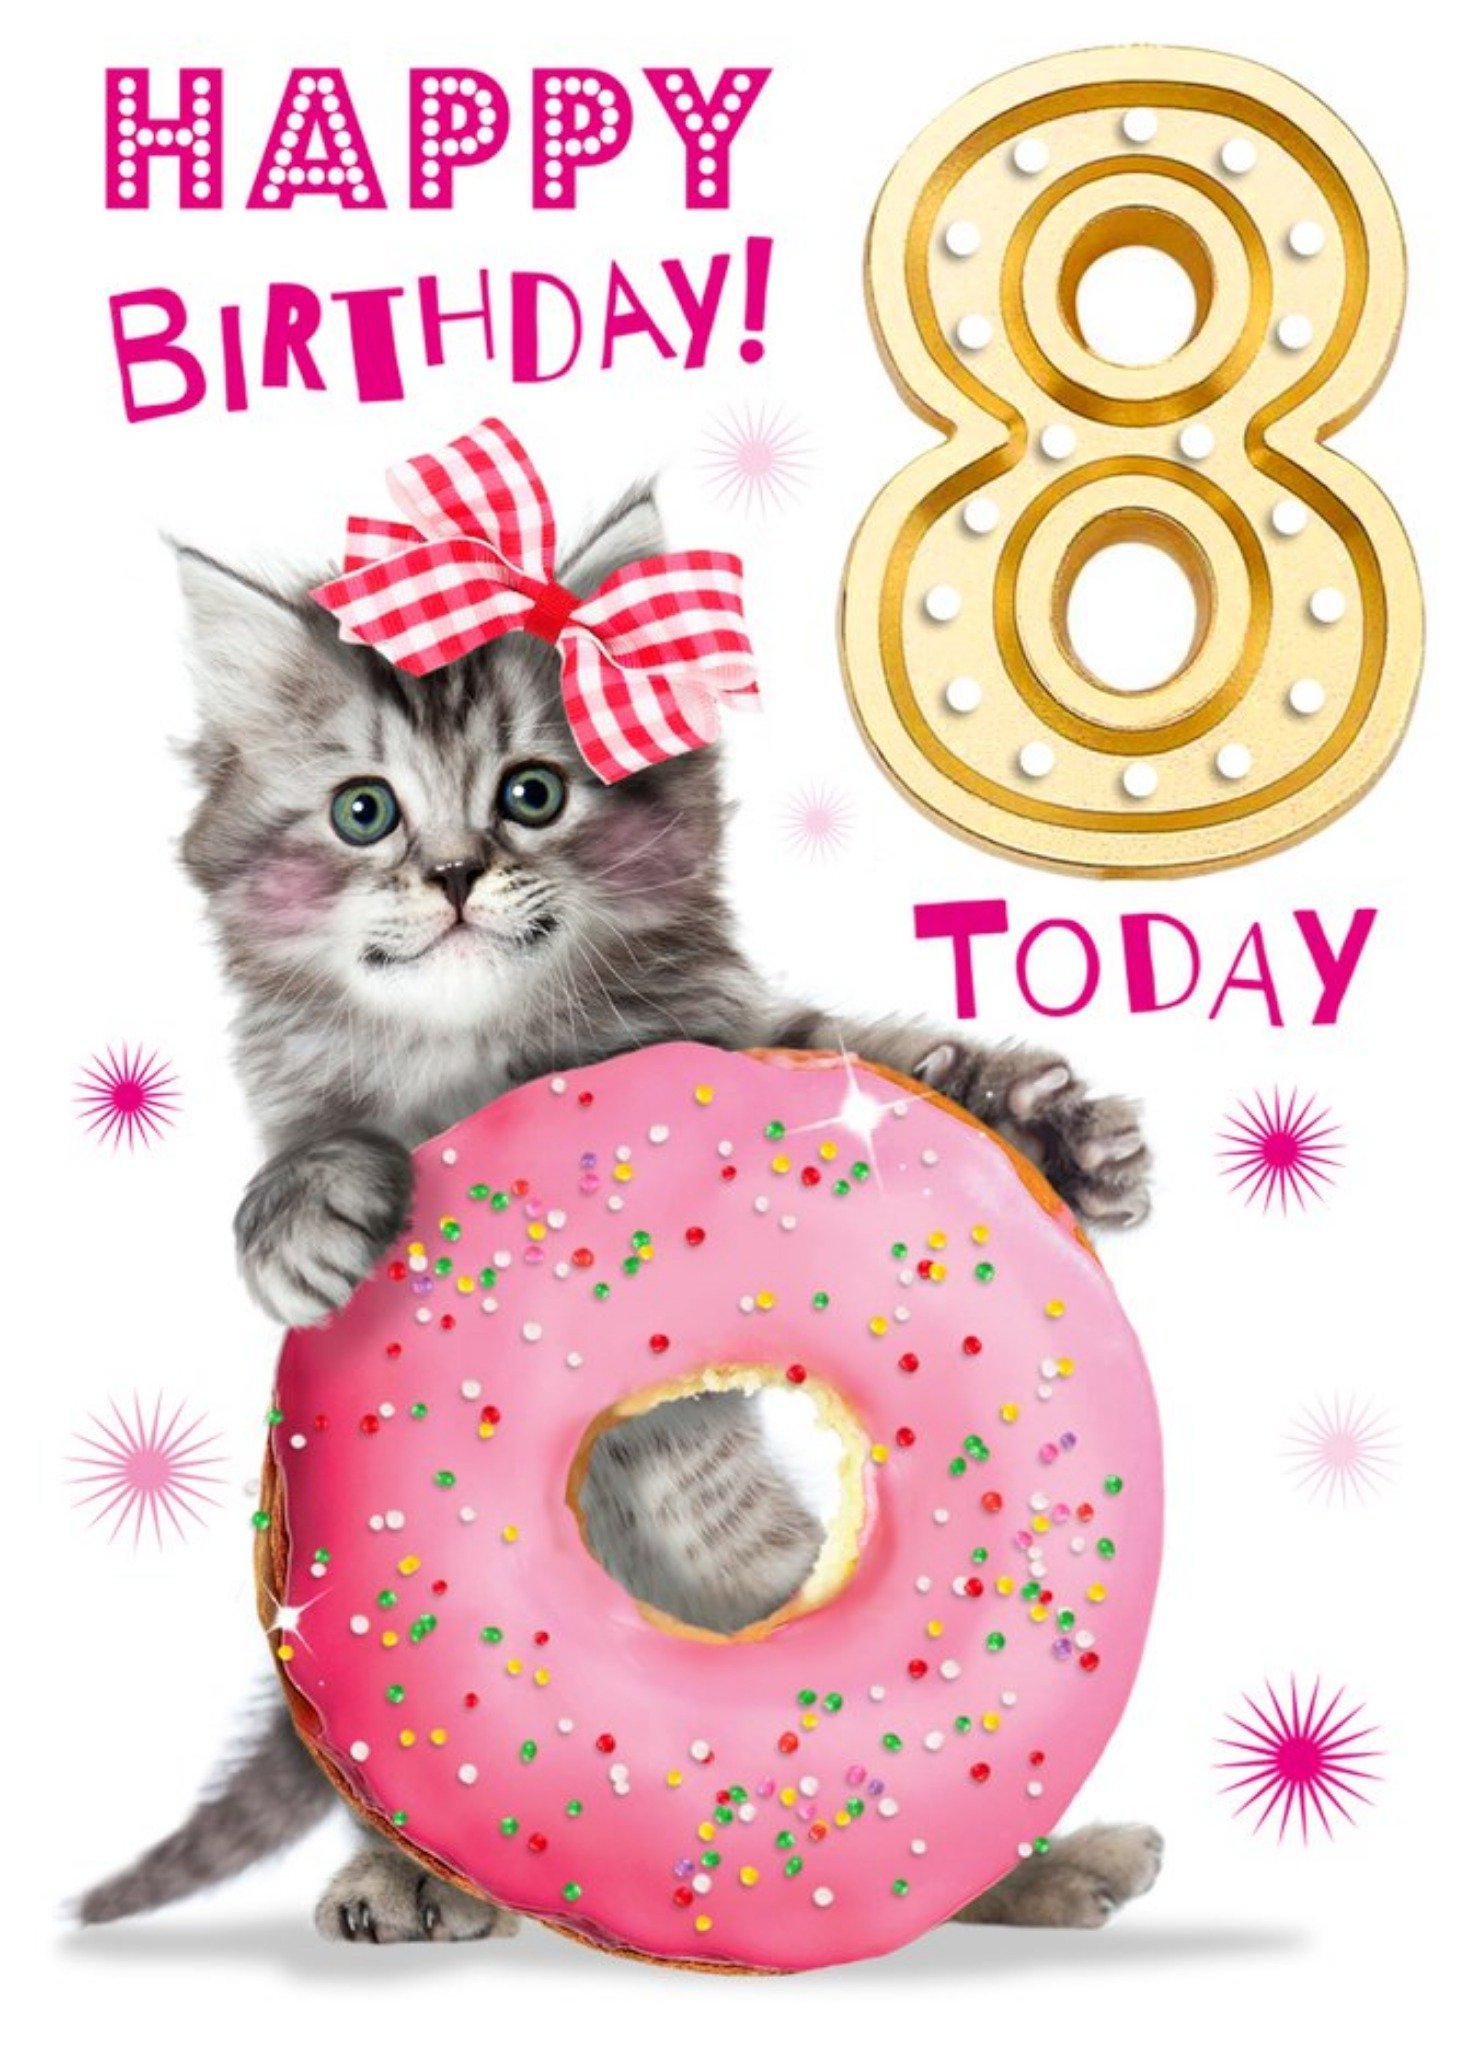 Moonpig Cute Kitten With Doughnut 8th Birthday Card Ecard